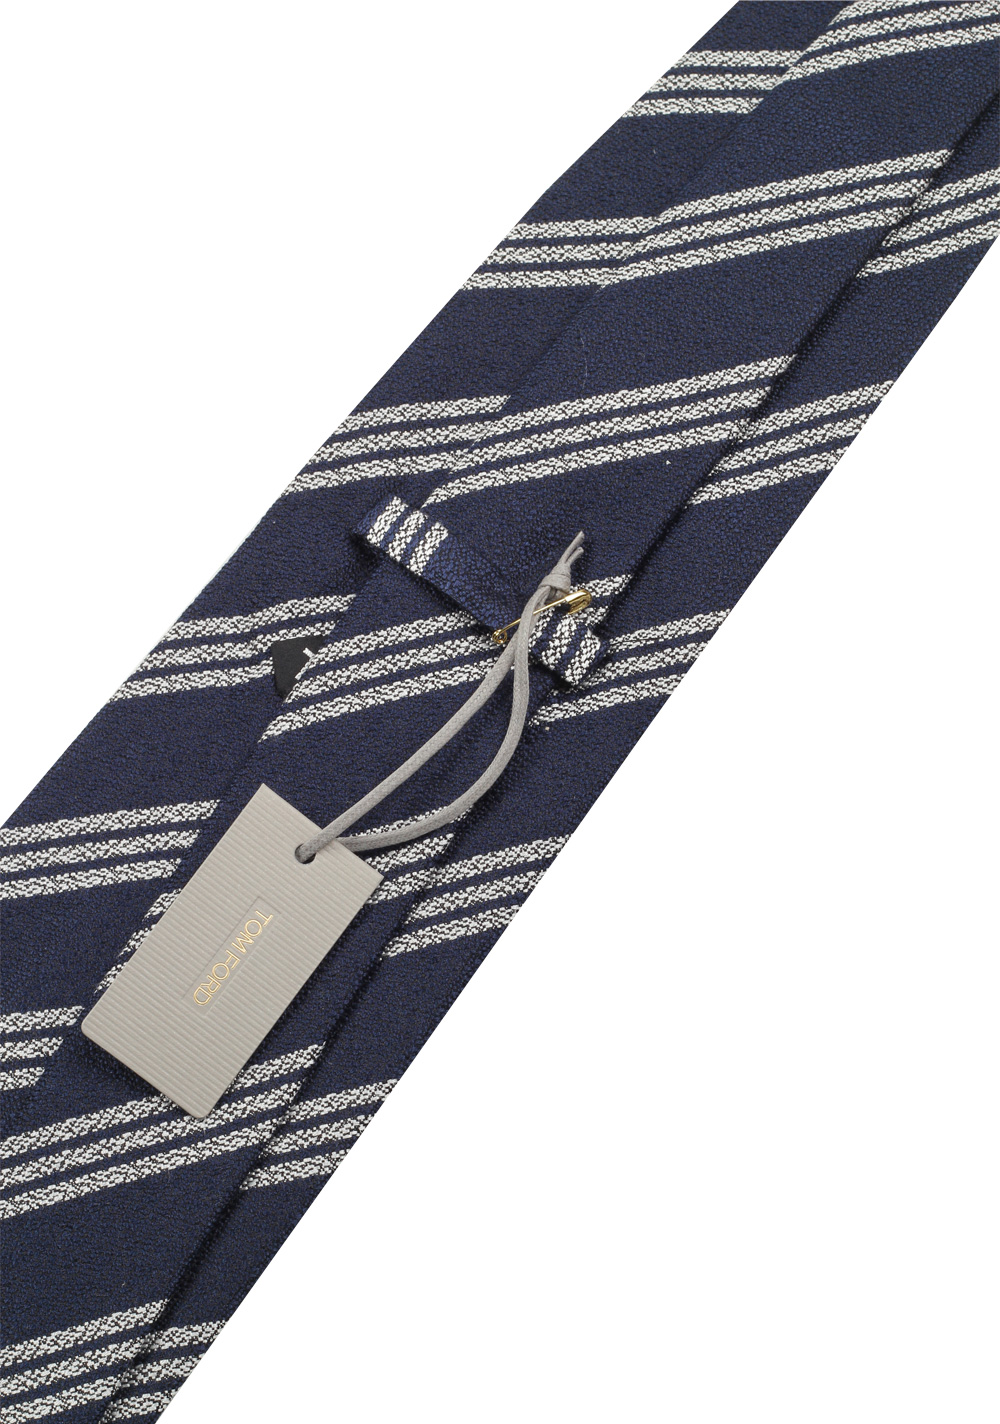 TOM FORD Striped Blue Tie In Silk | Costume Limité